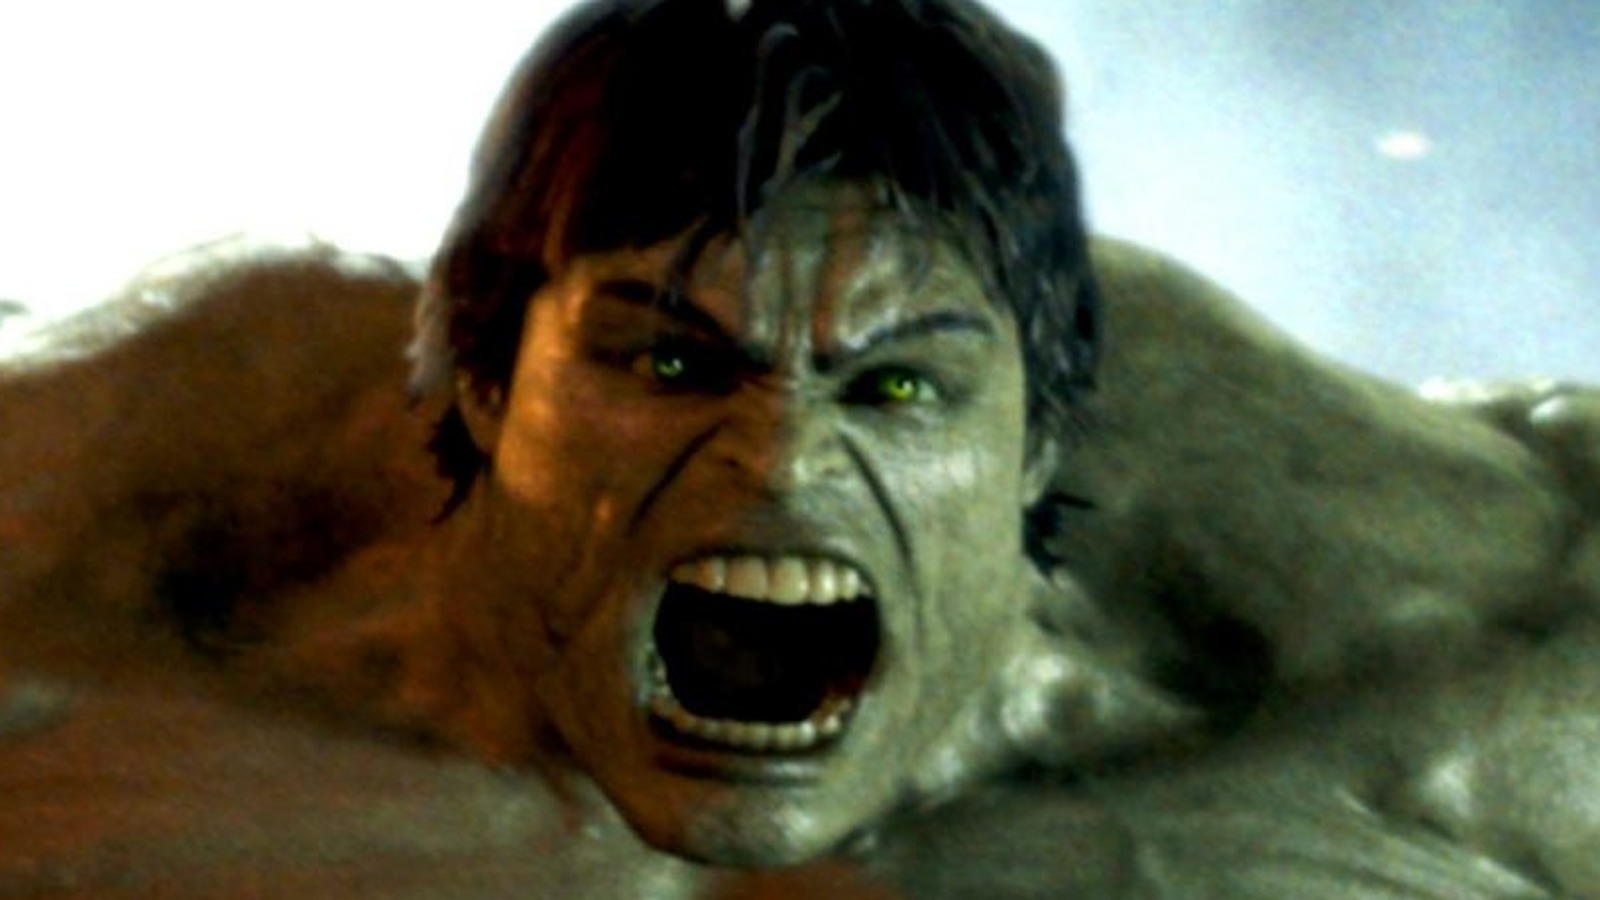 angry screaming hulk